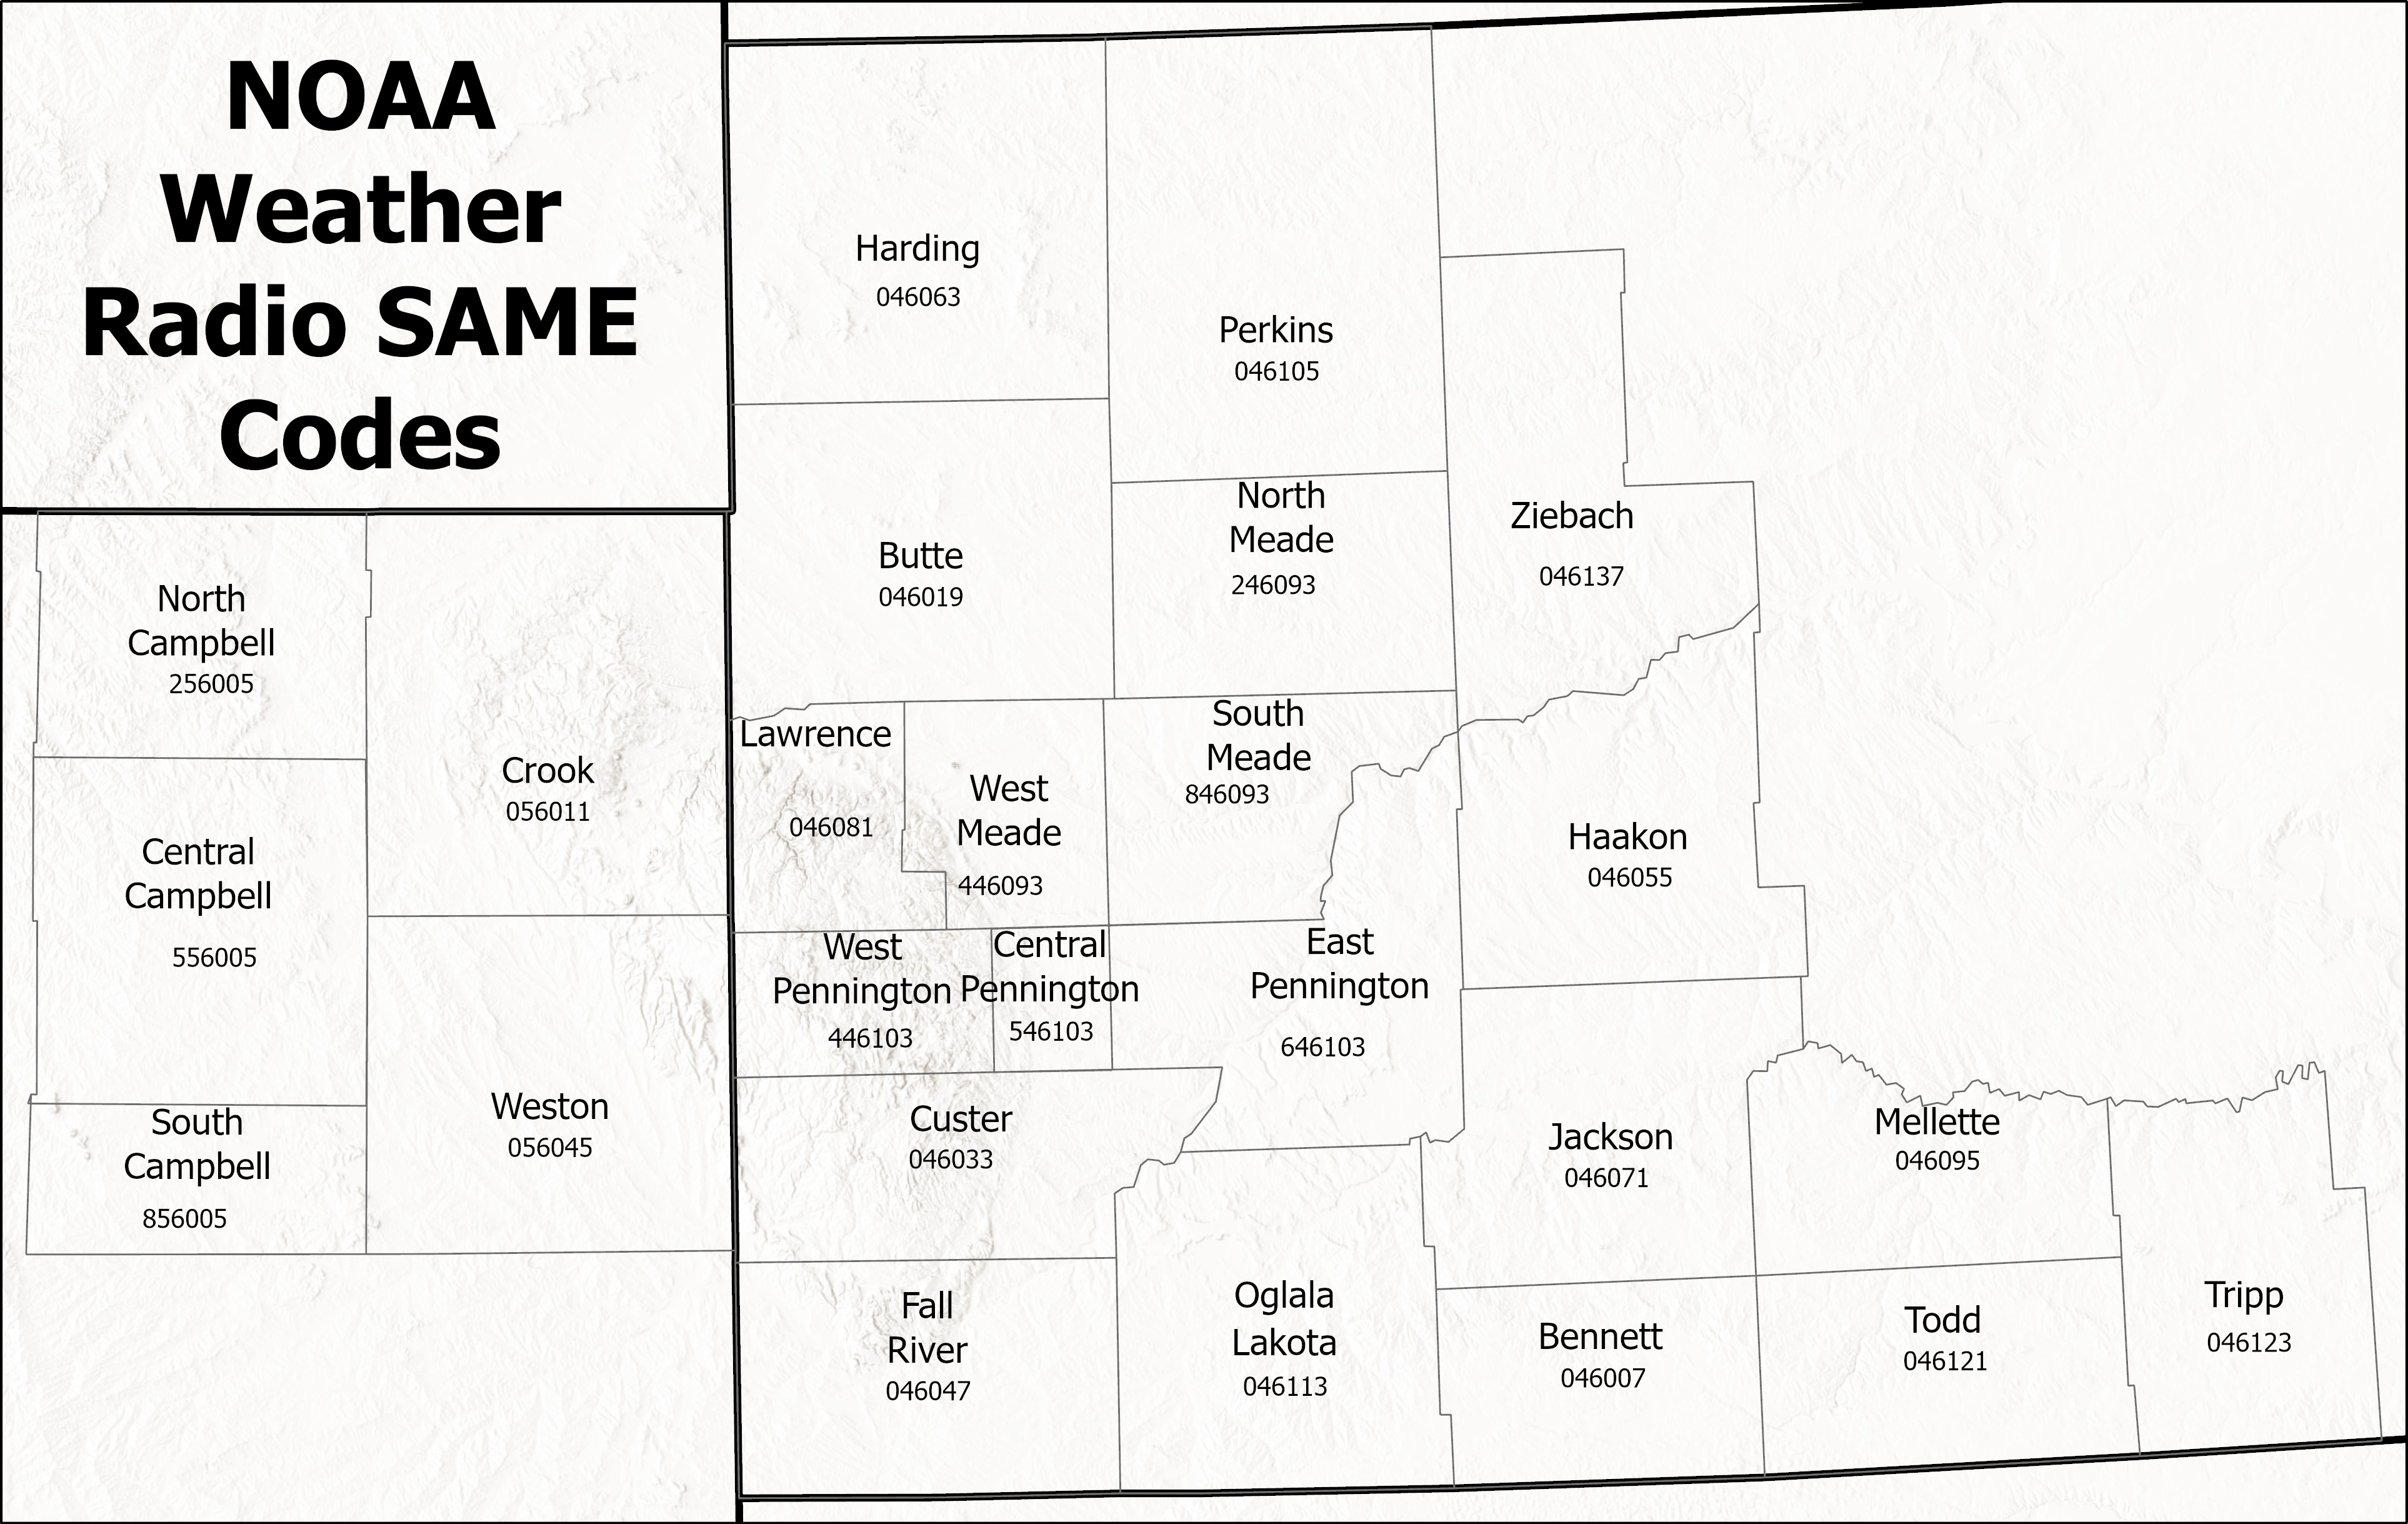 NOAA Weather Radio SAME Codes for the Black Hills region